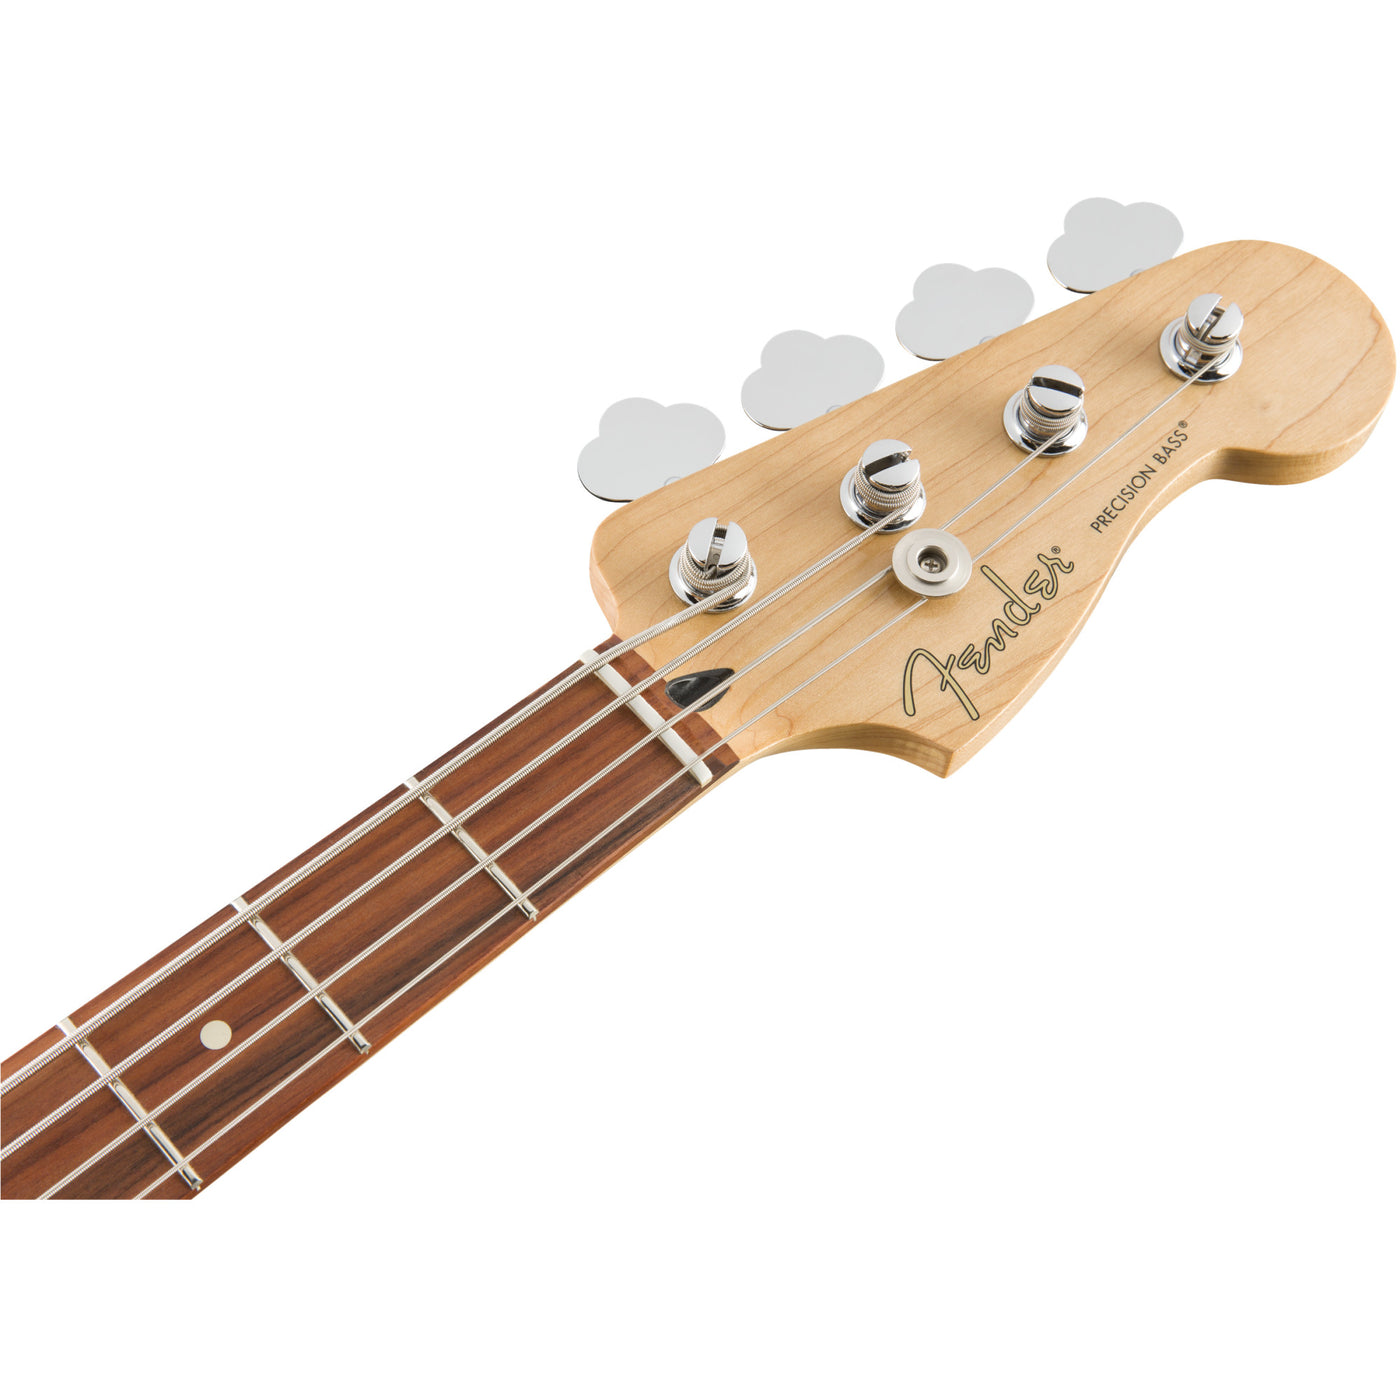 Fender Player Precision Bass, 3-Color Sunburst (0149803500)